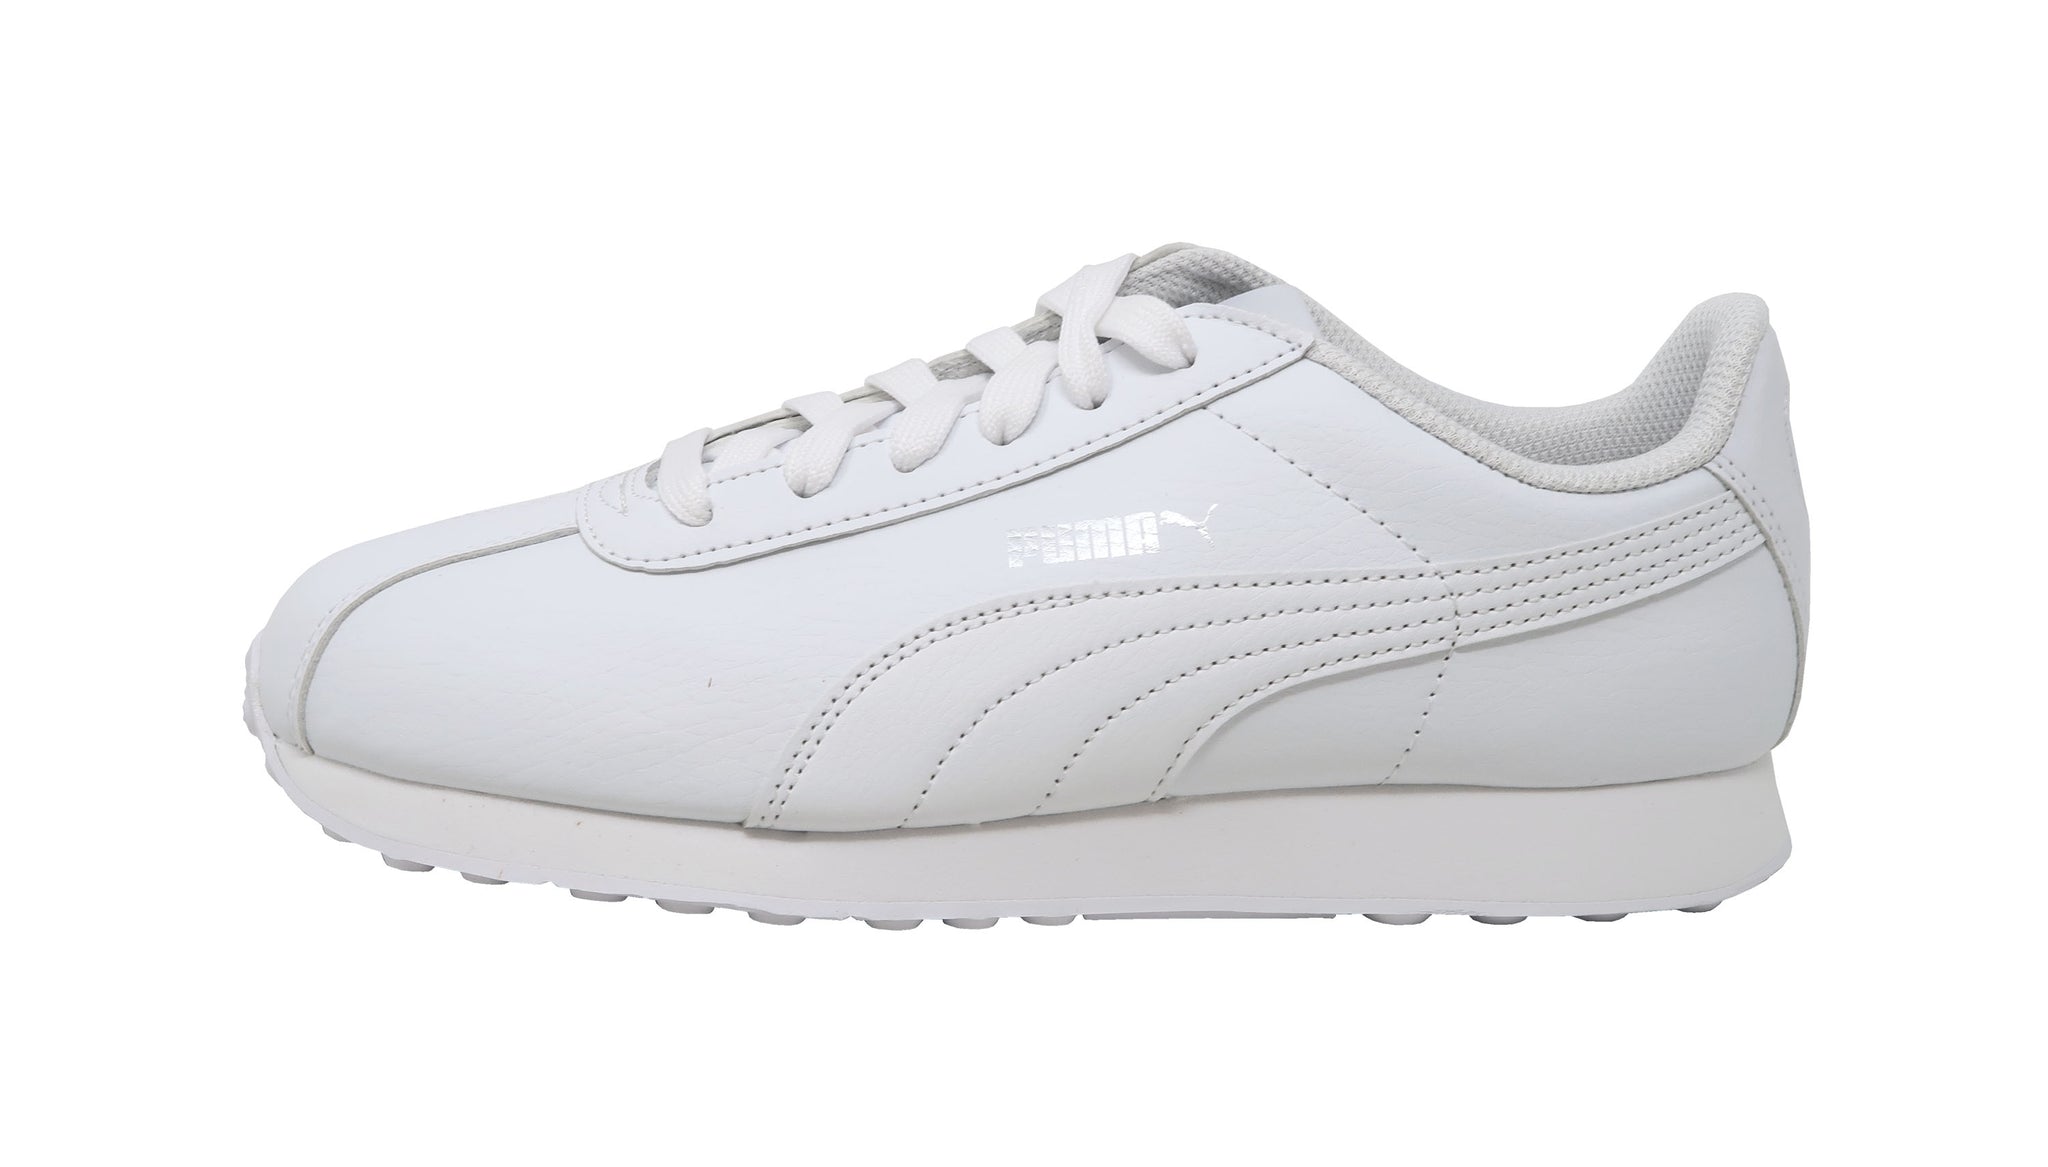 Puma Big Kids Turin Leather True White/Silver Shoes